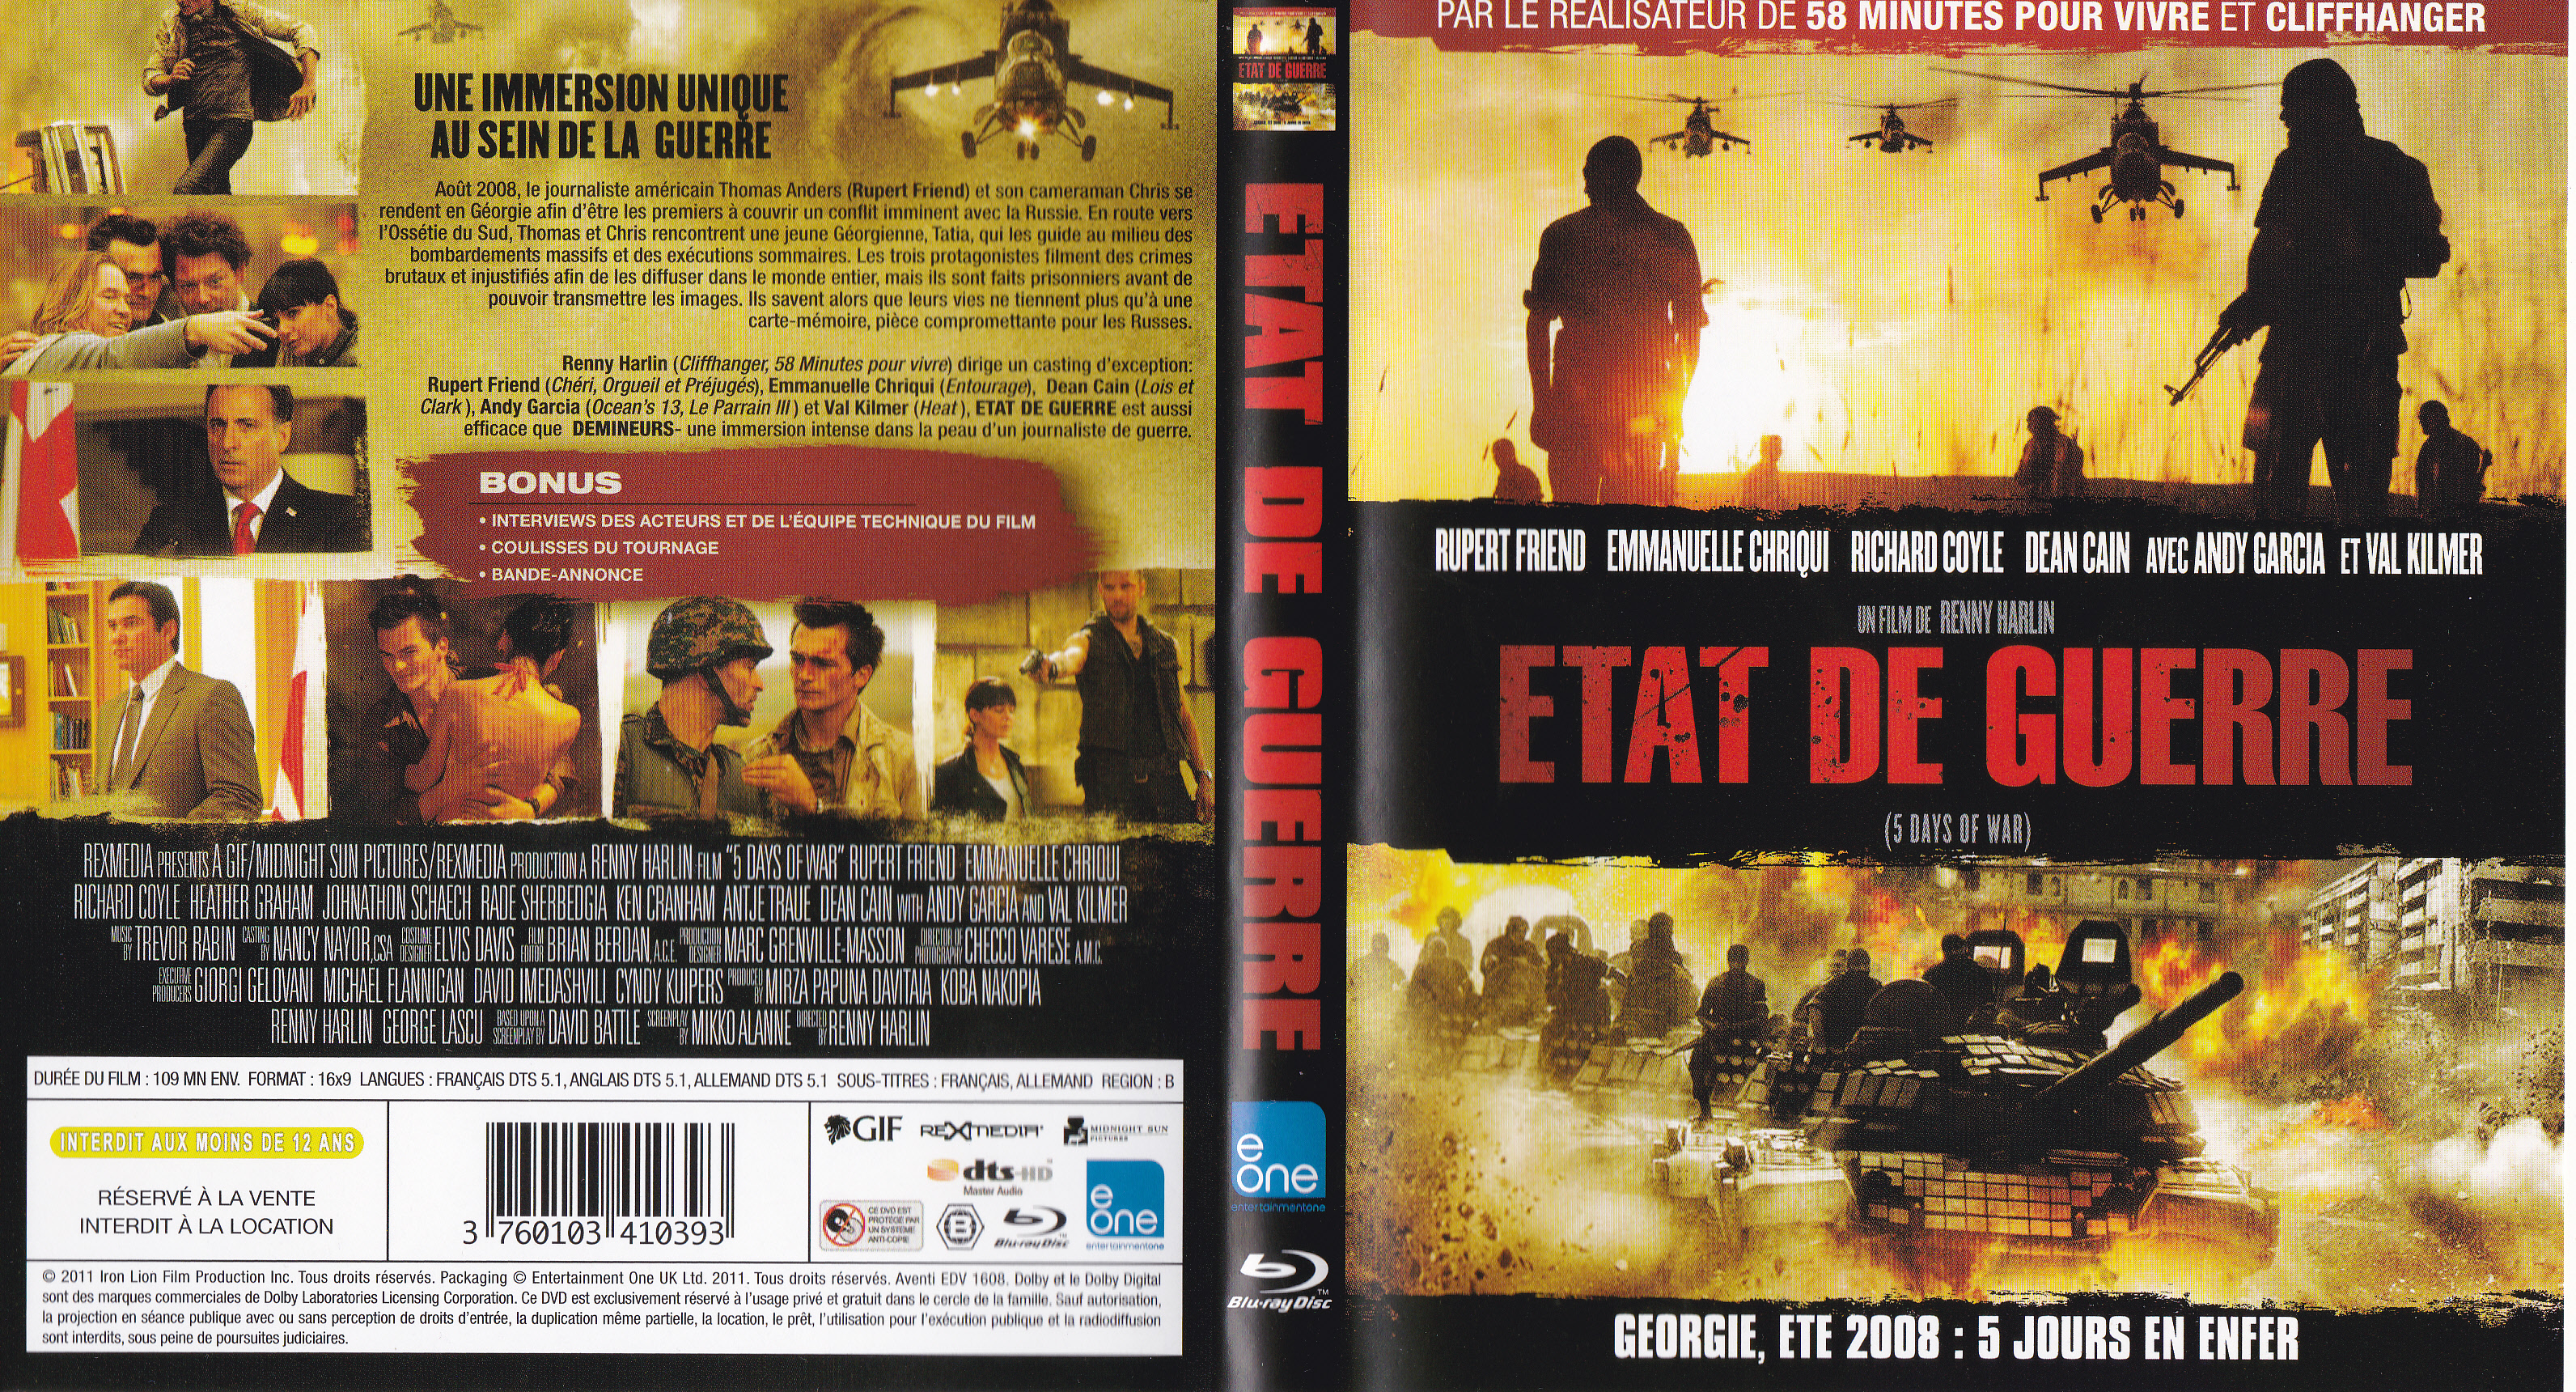 Jaquette DVD Etat de guerre (2011) (BLU-RAY)